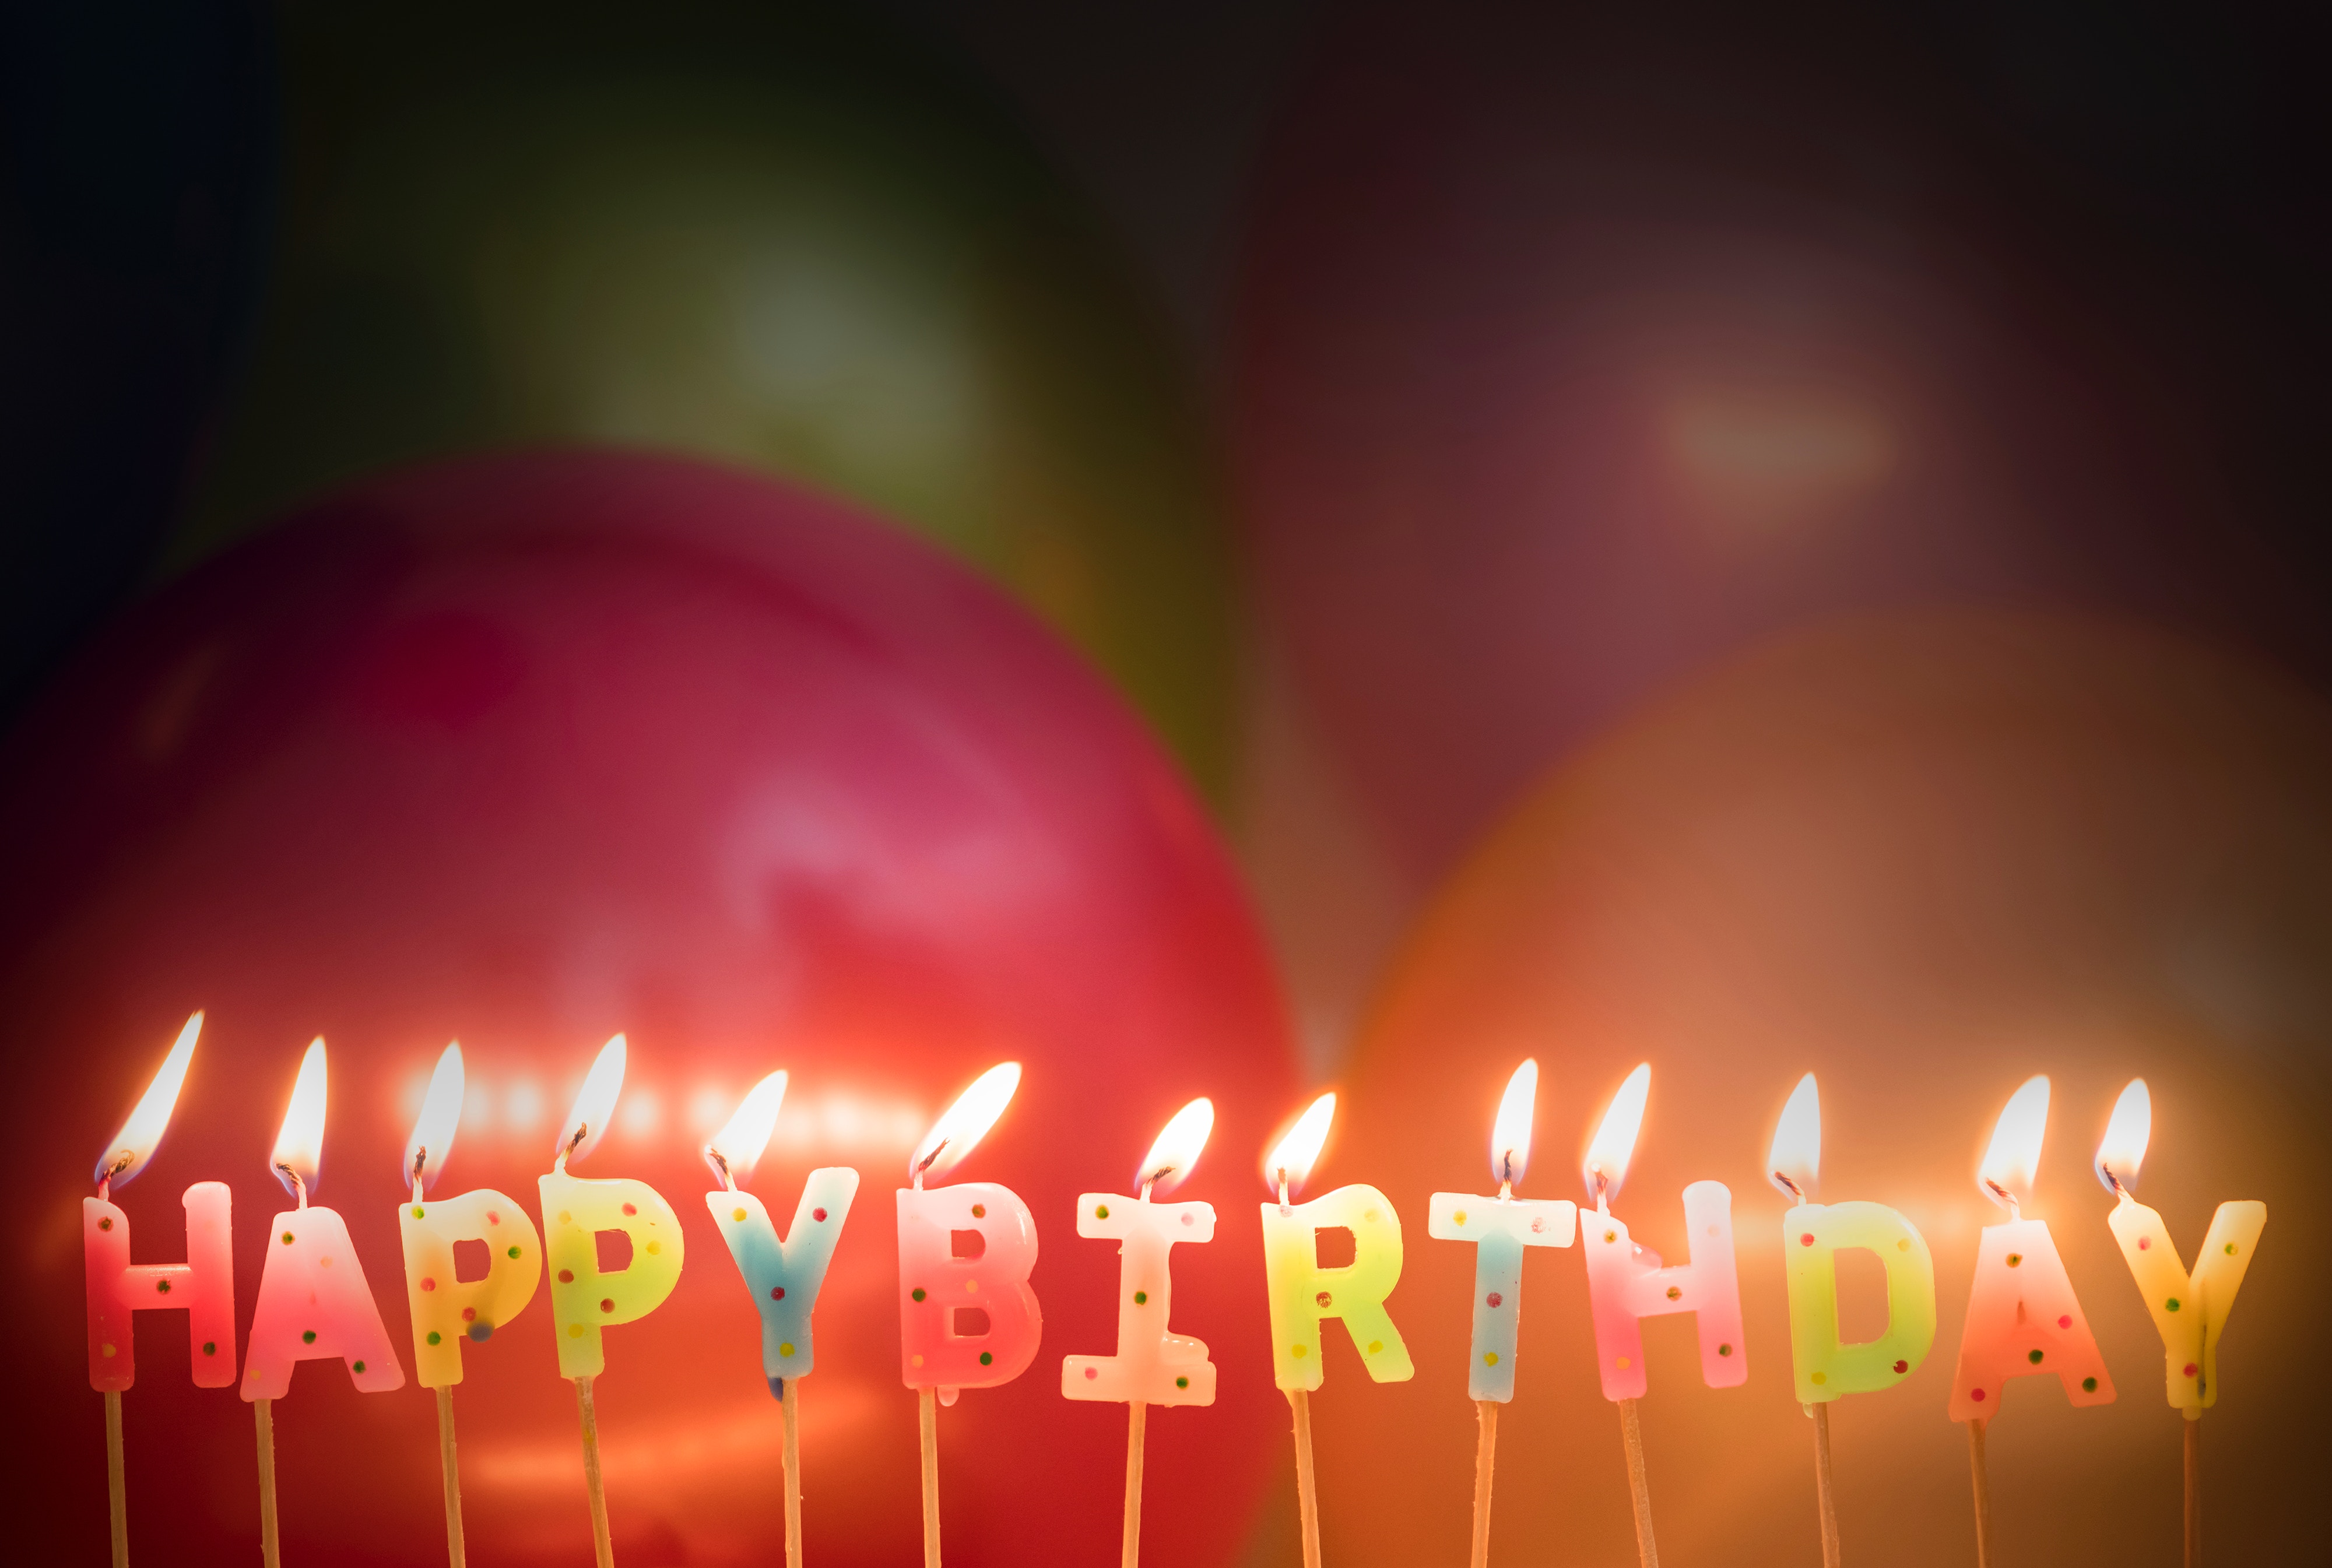 Happy Birthday by rawpixel